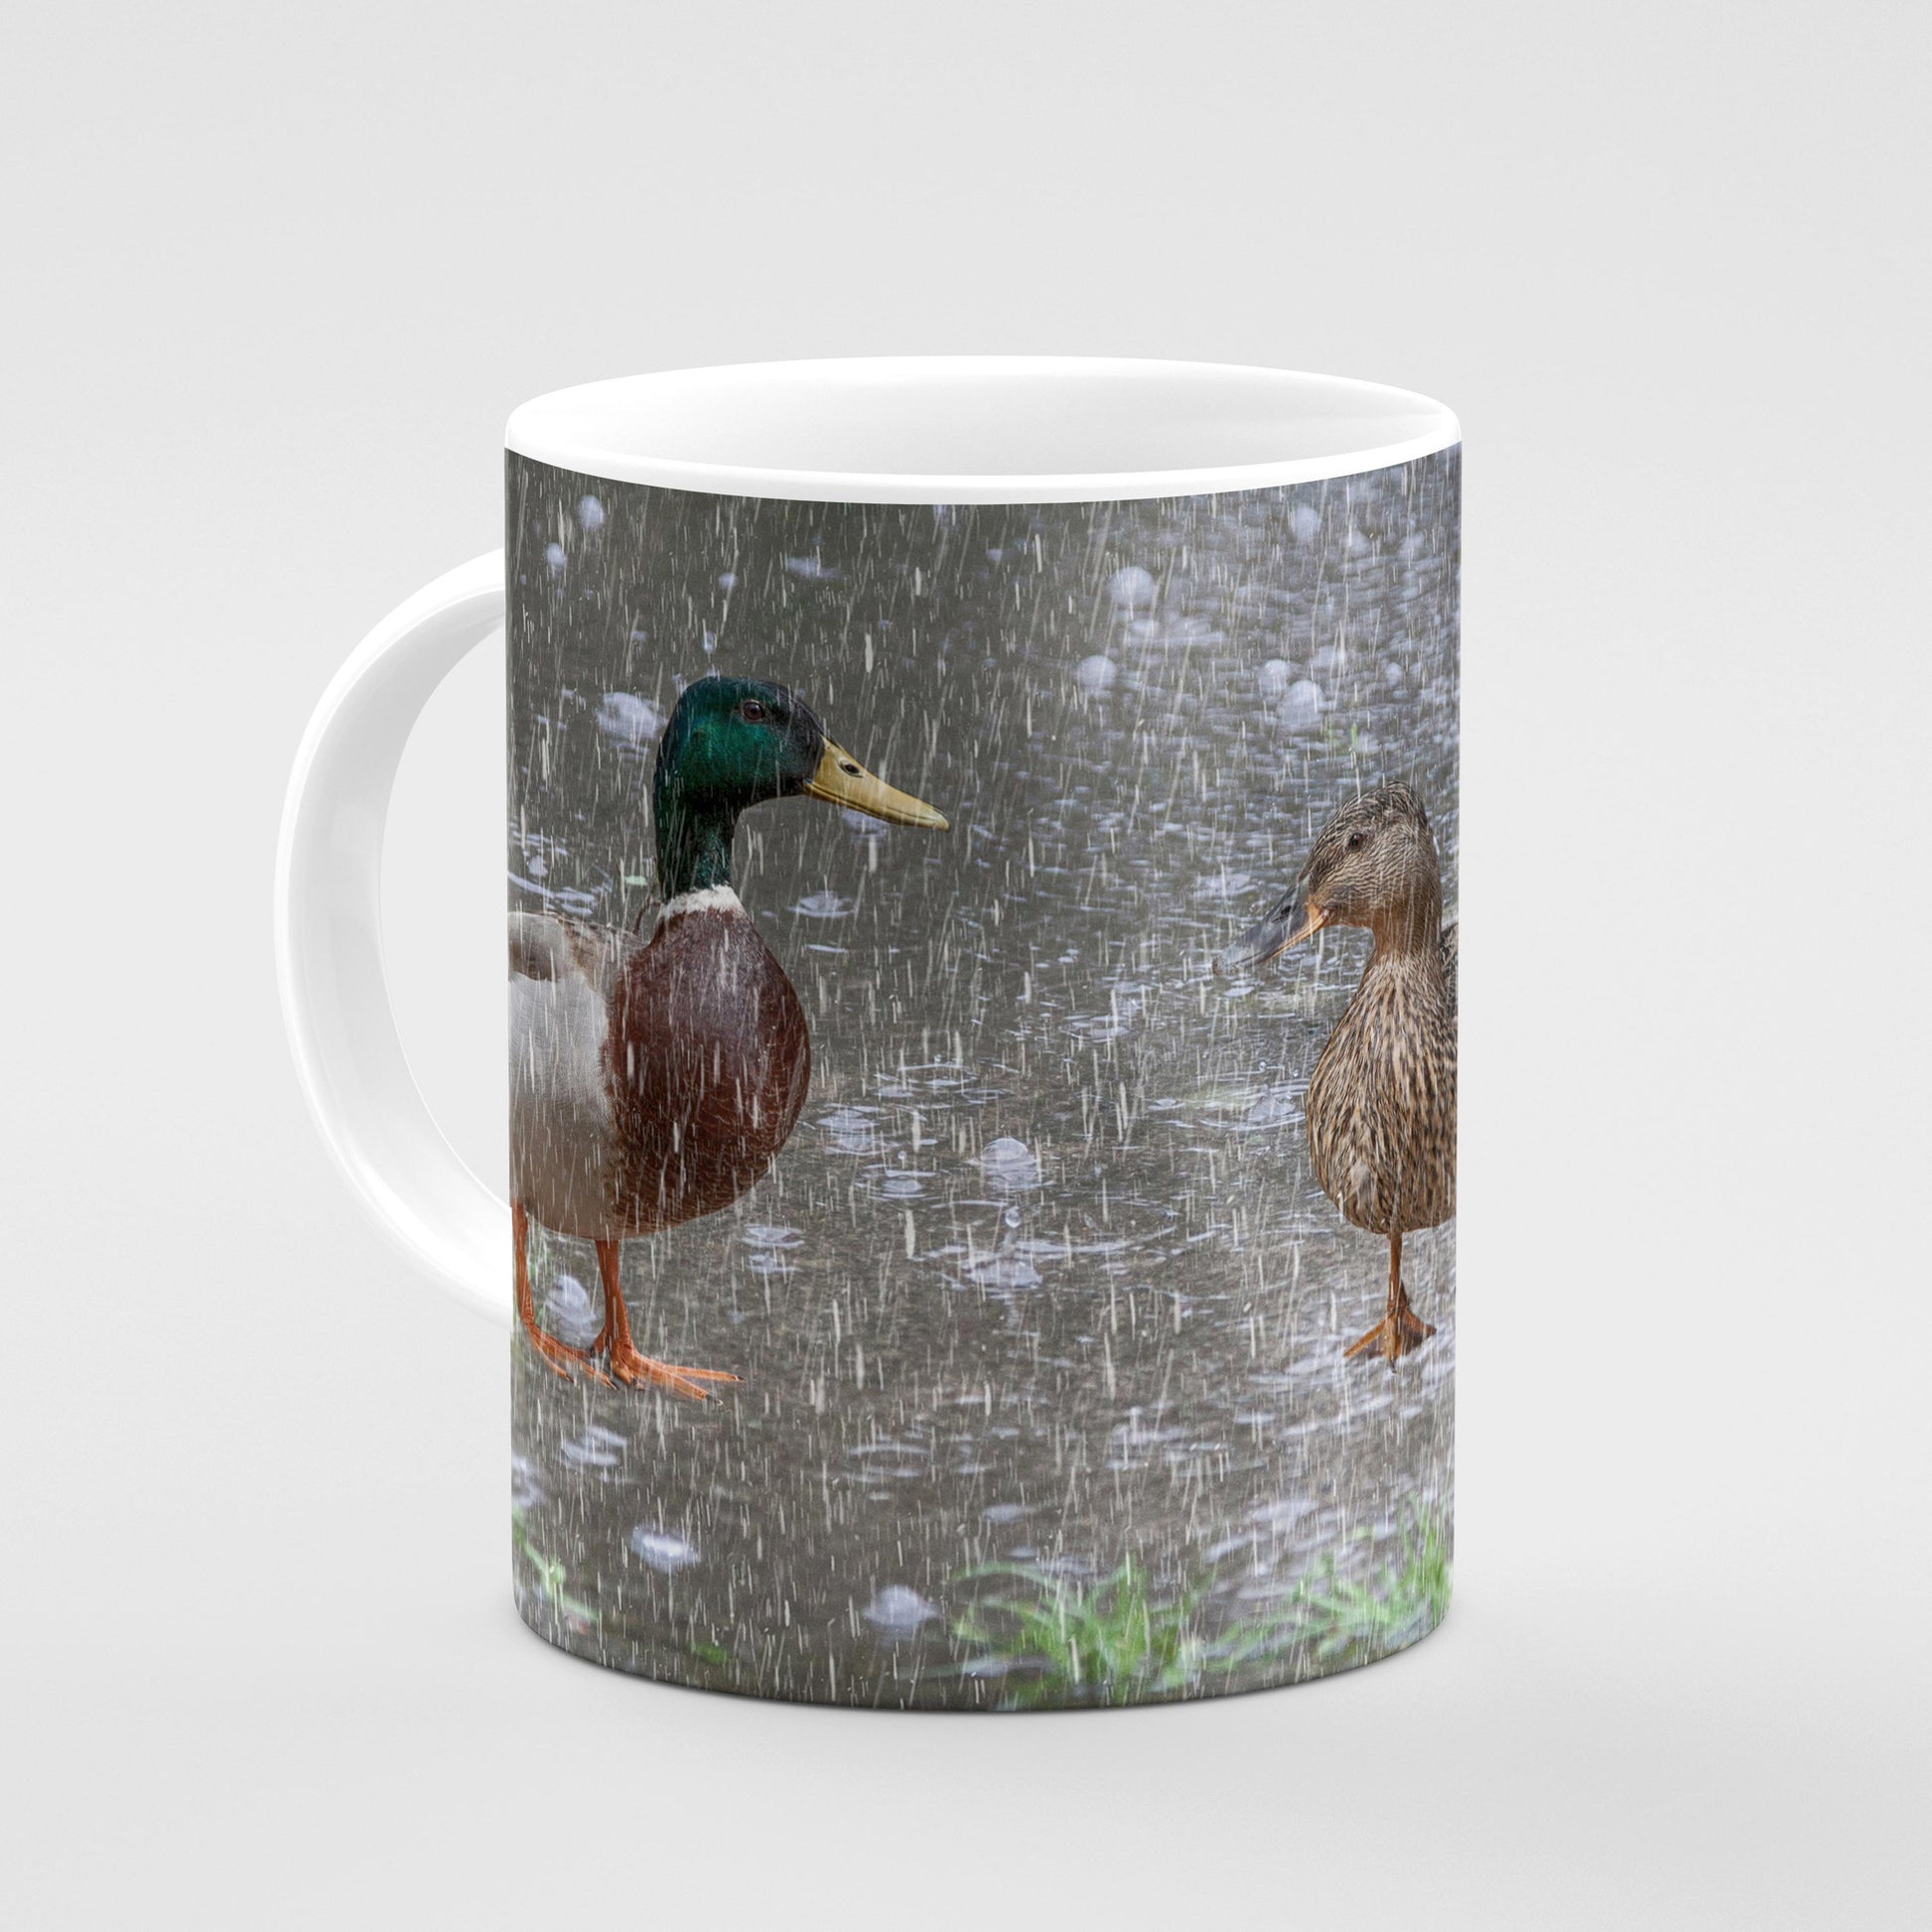 Two Ducks Mug - The Great British Weather - Kitchy & Co 10oz Mug Mugs